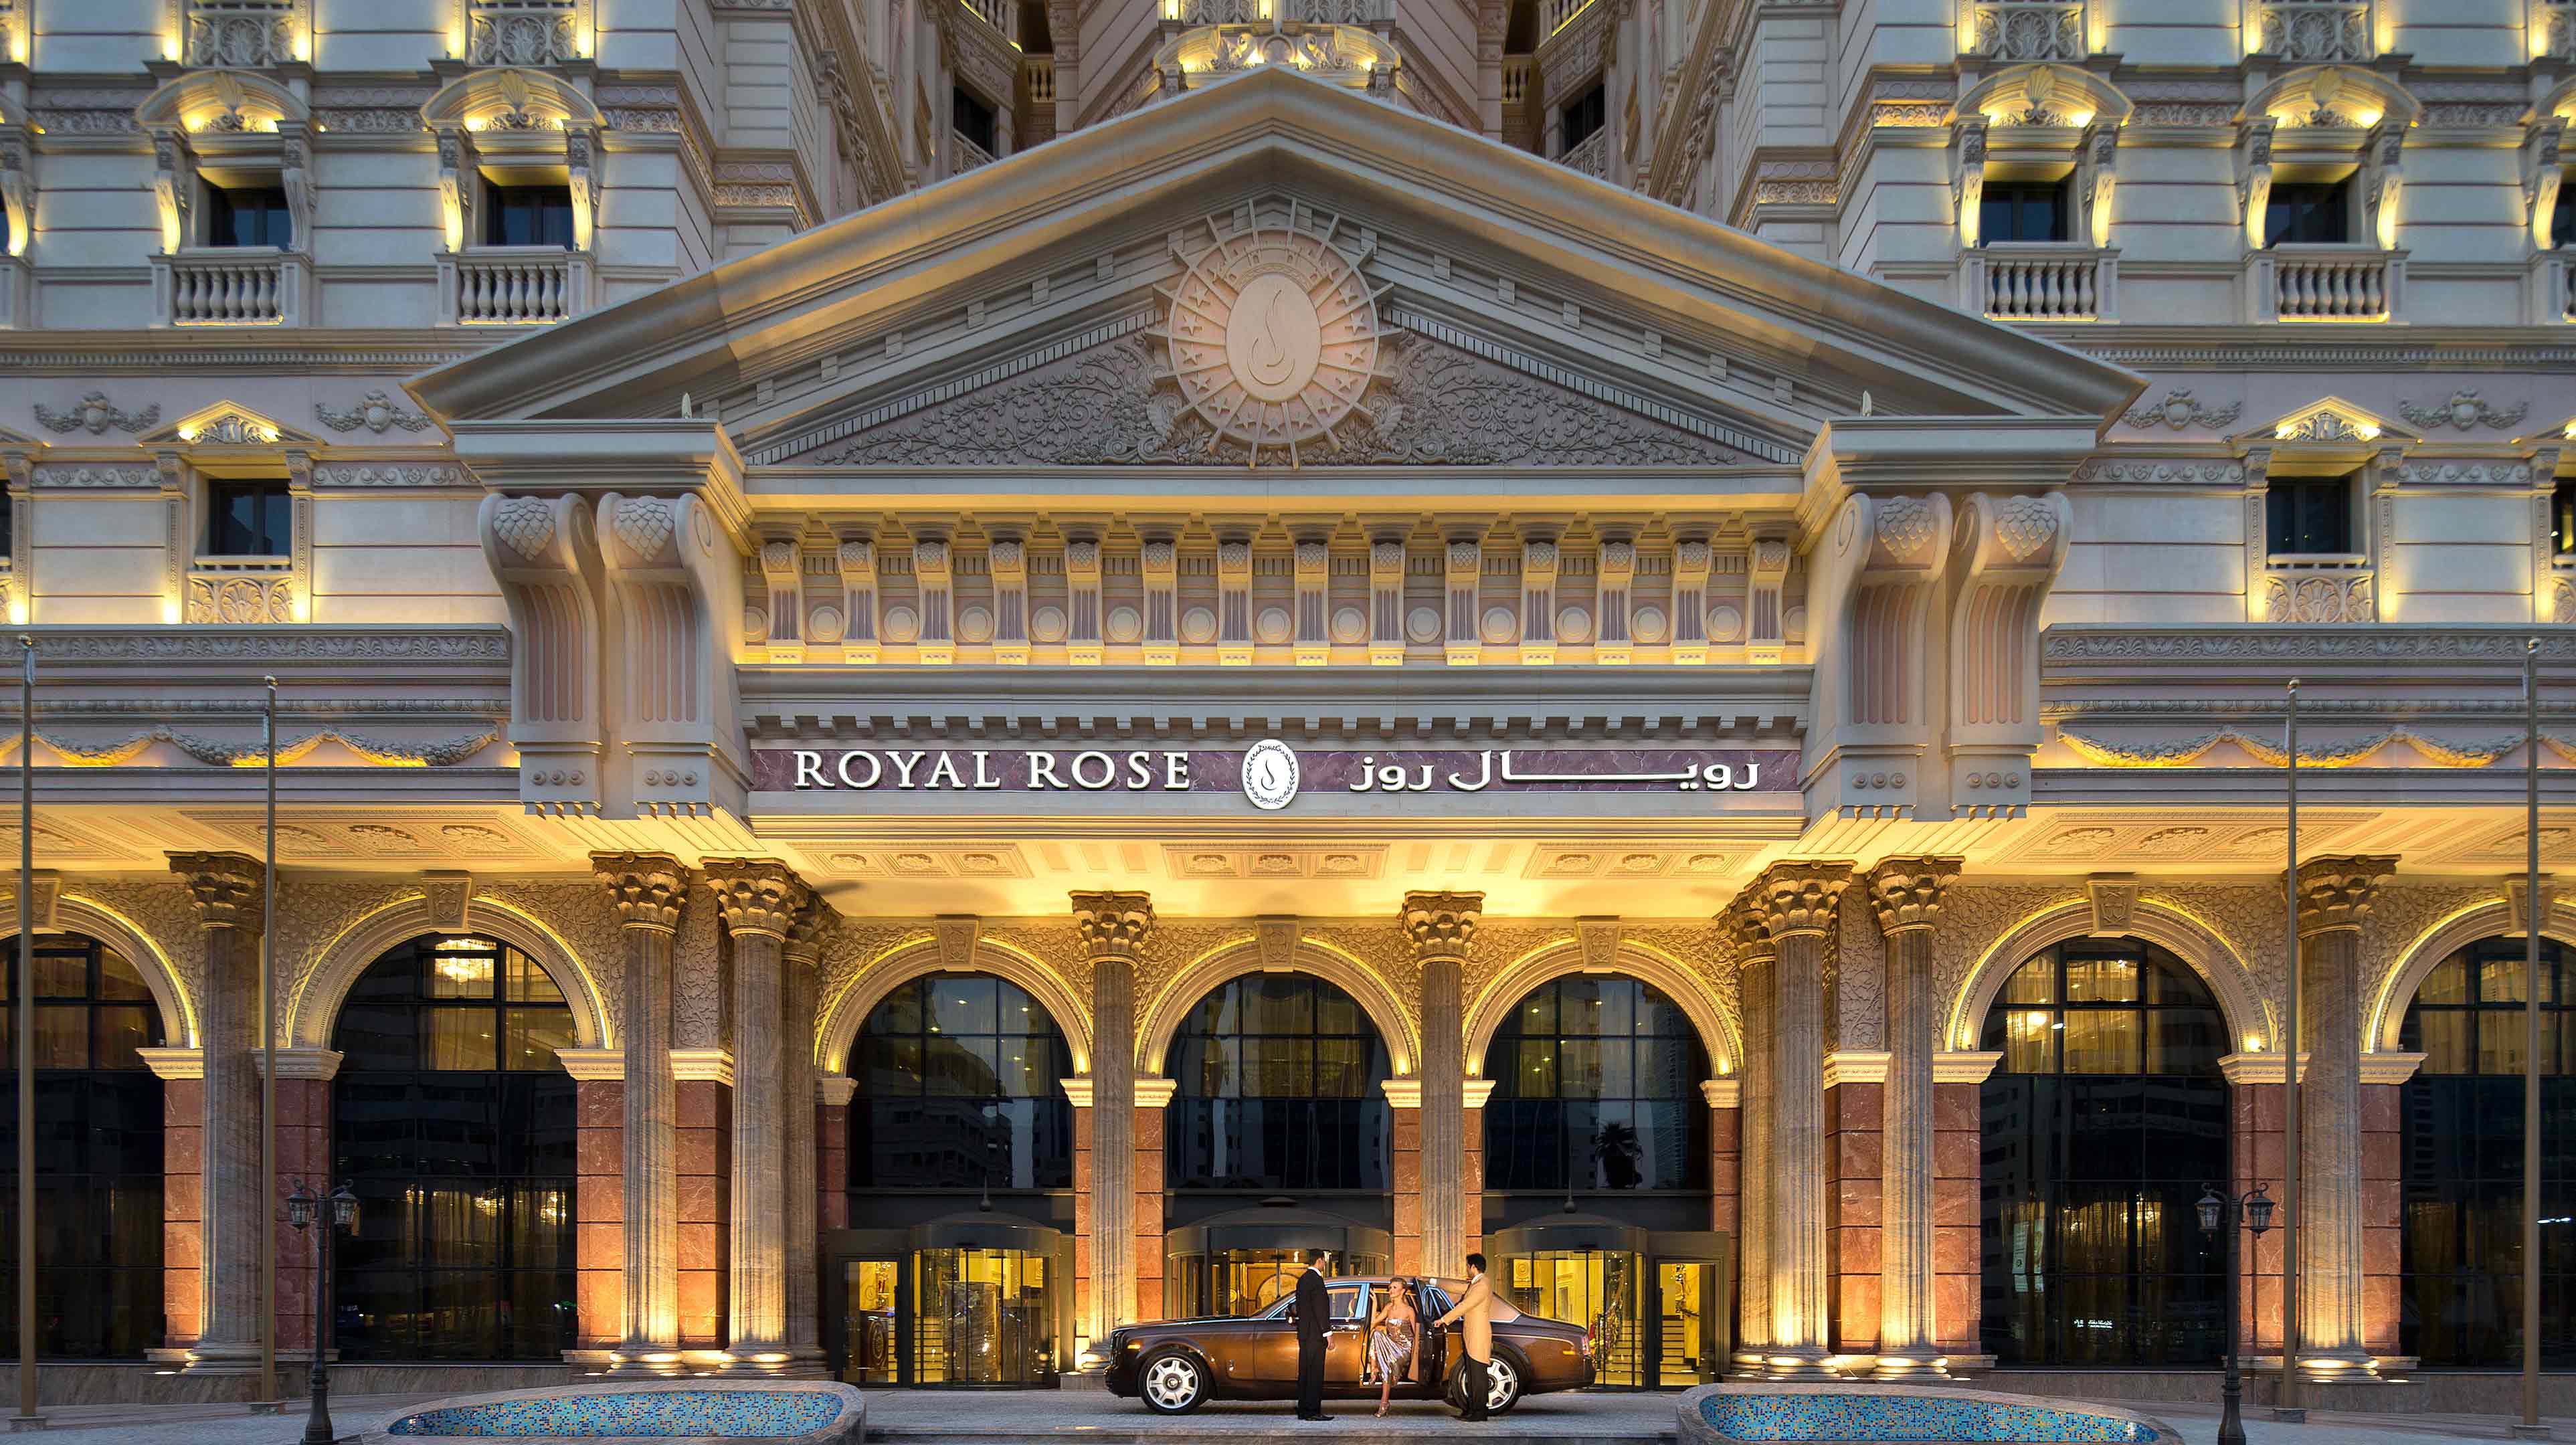 Royal Rose hotel